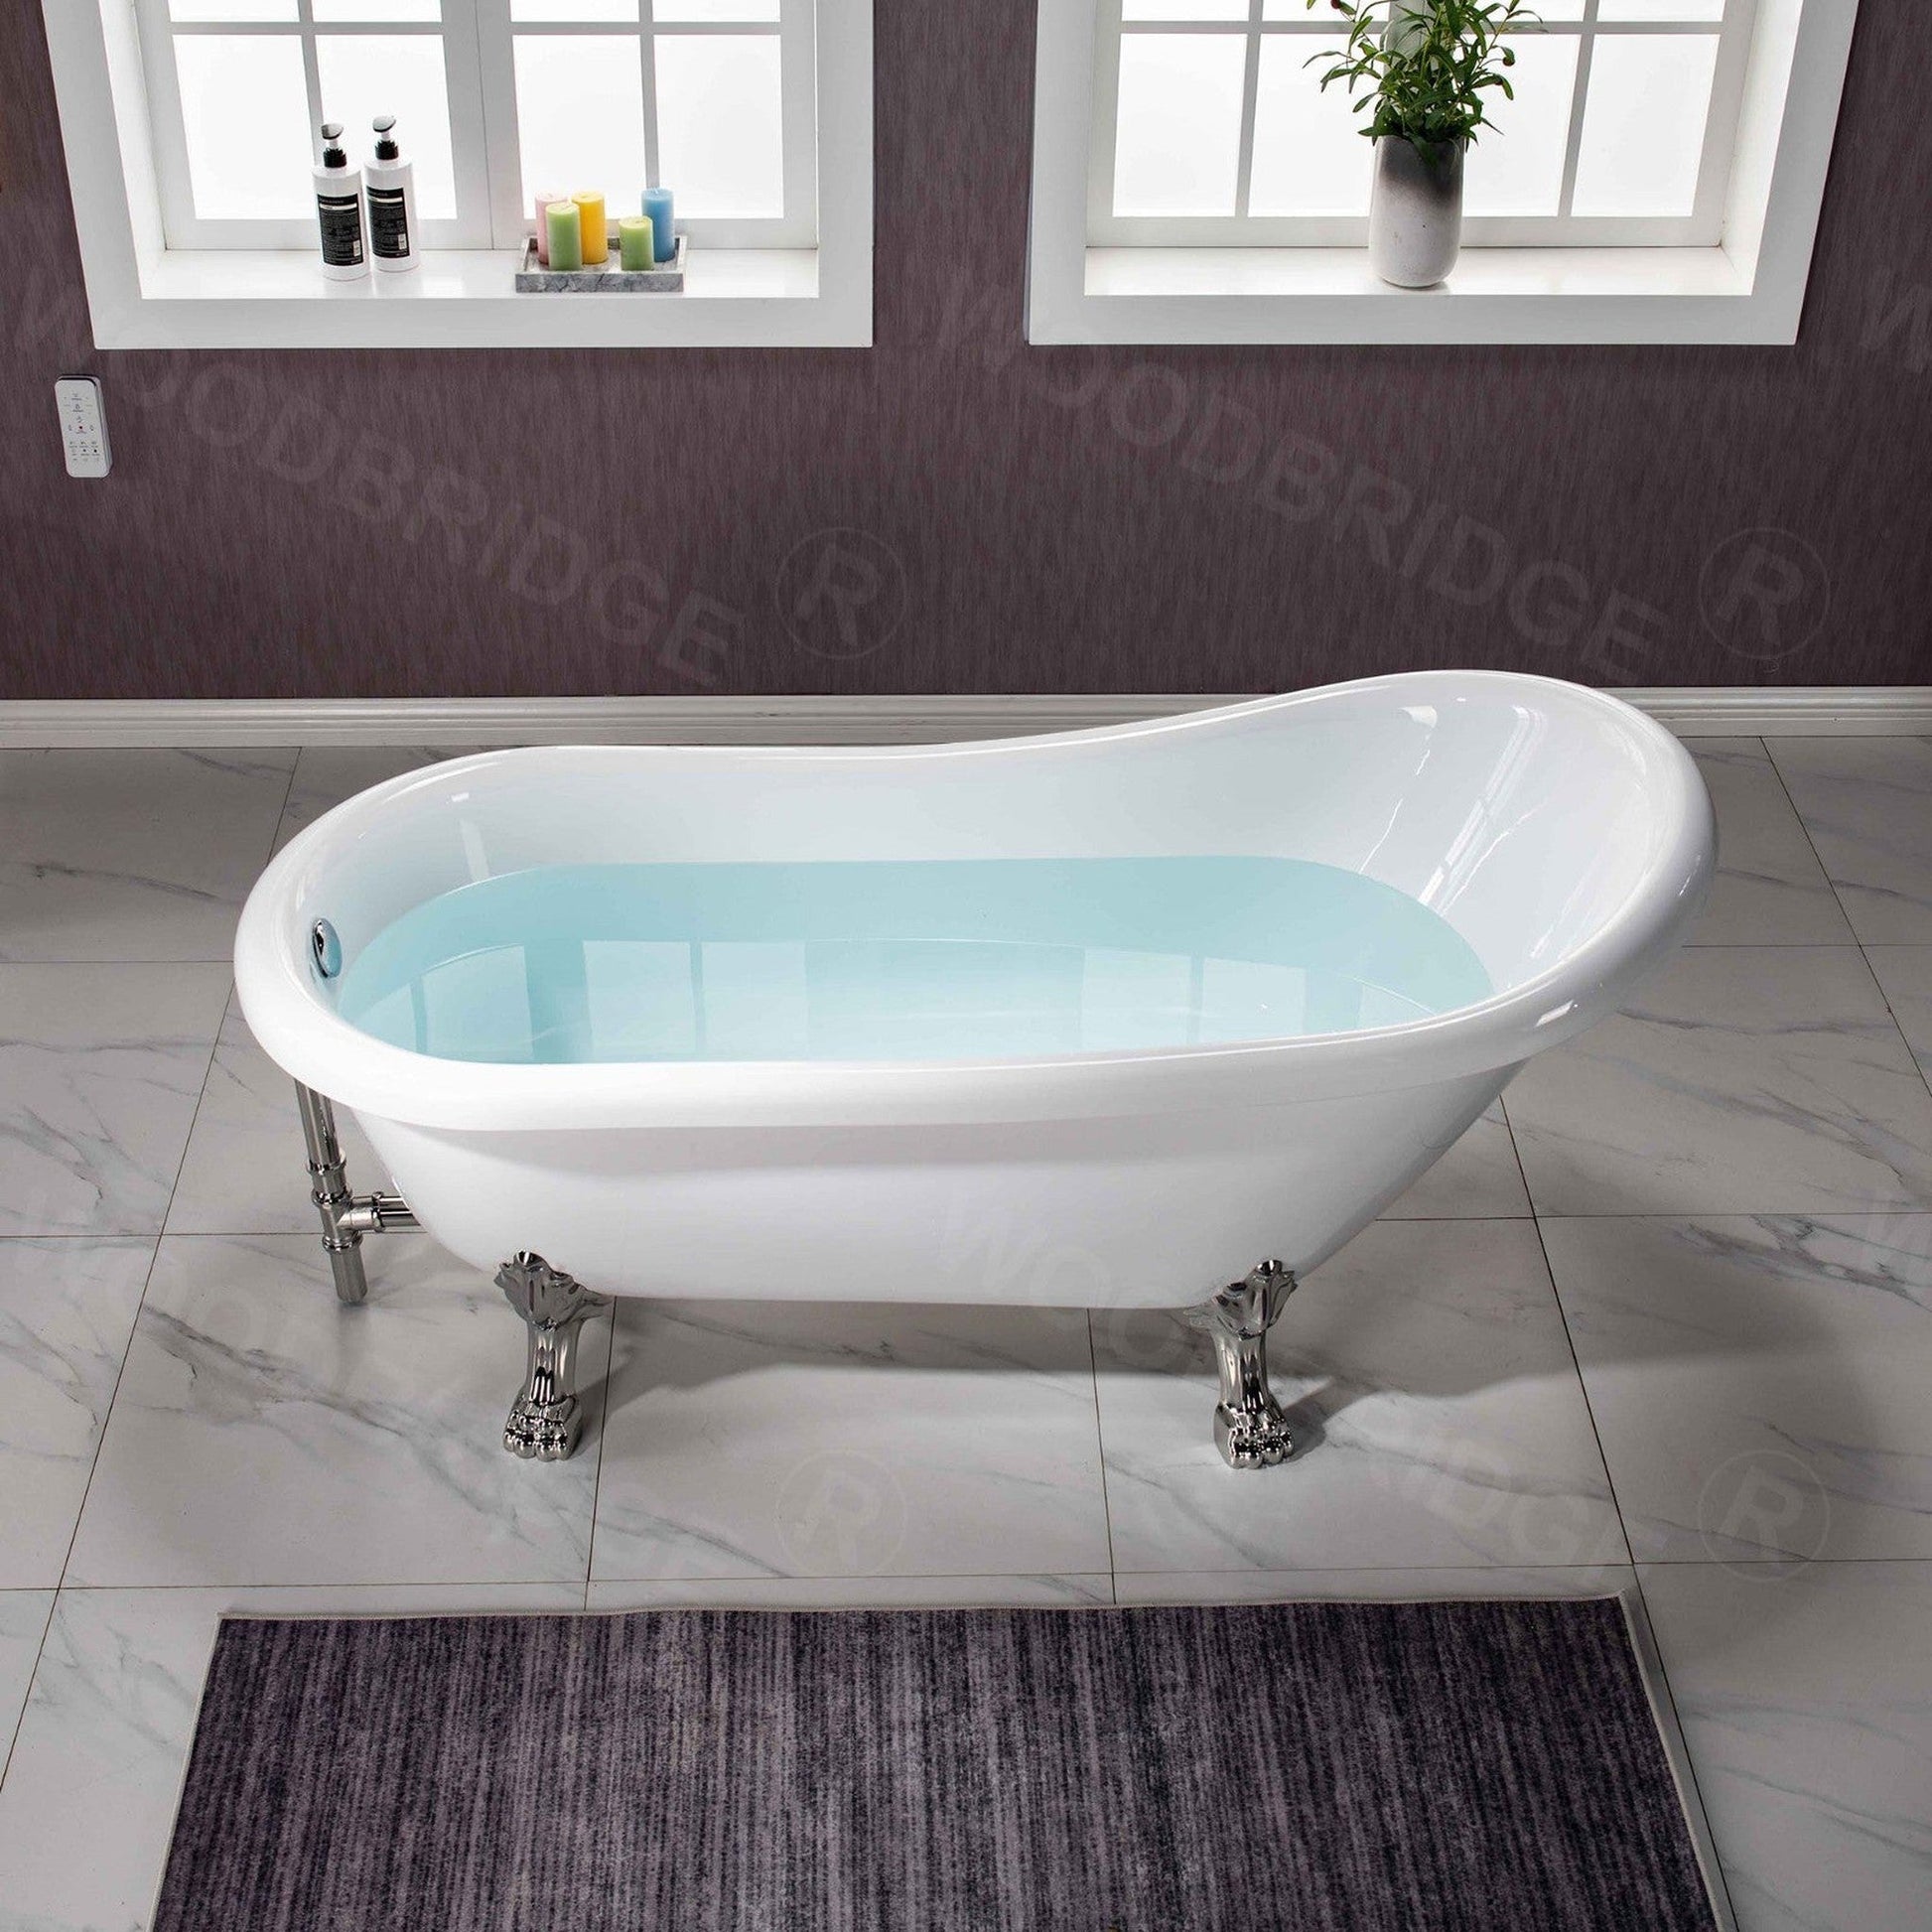 WoodBridge 67" White Acrylic Slipper Clawfoot Bath Tub With Brushed Nickel Feet, Drain, Overflow, F0070BNVT Tub Filler and Caddy Tray